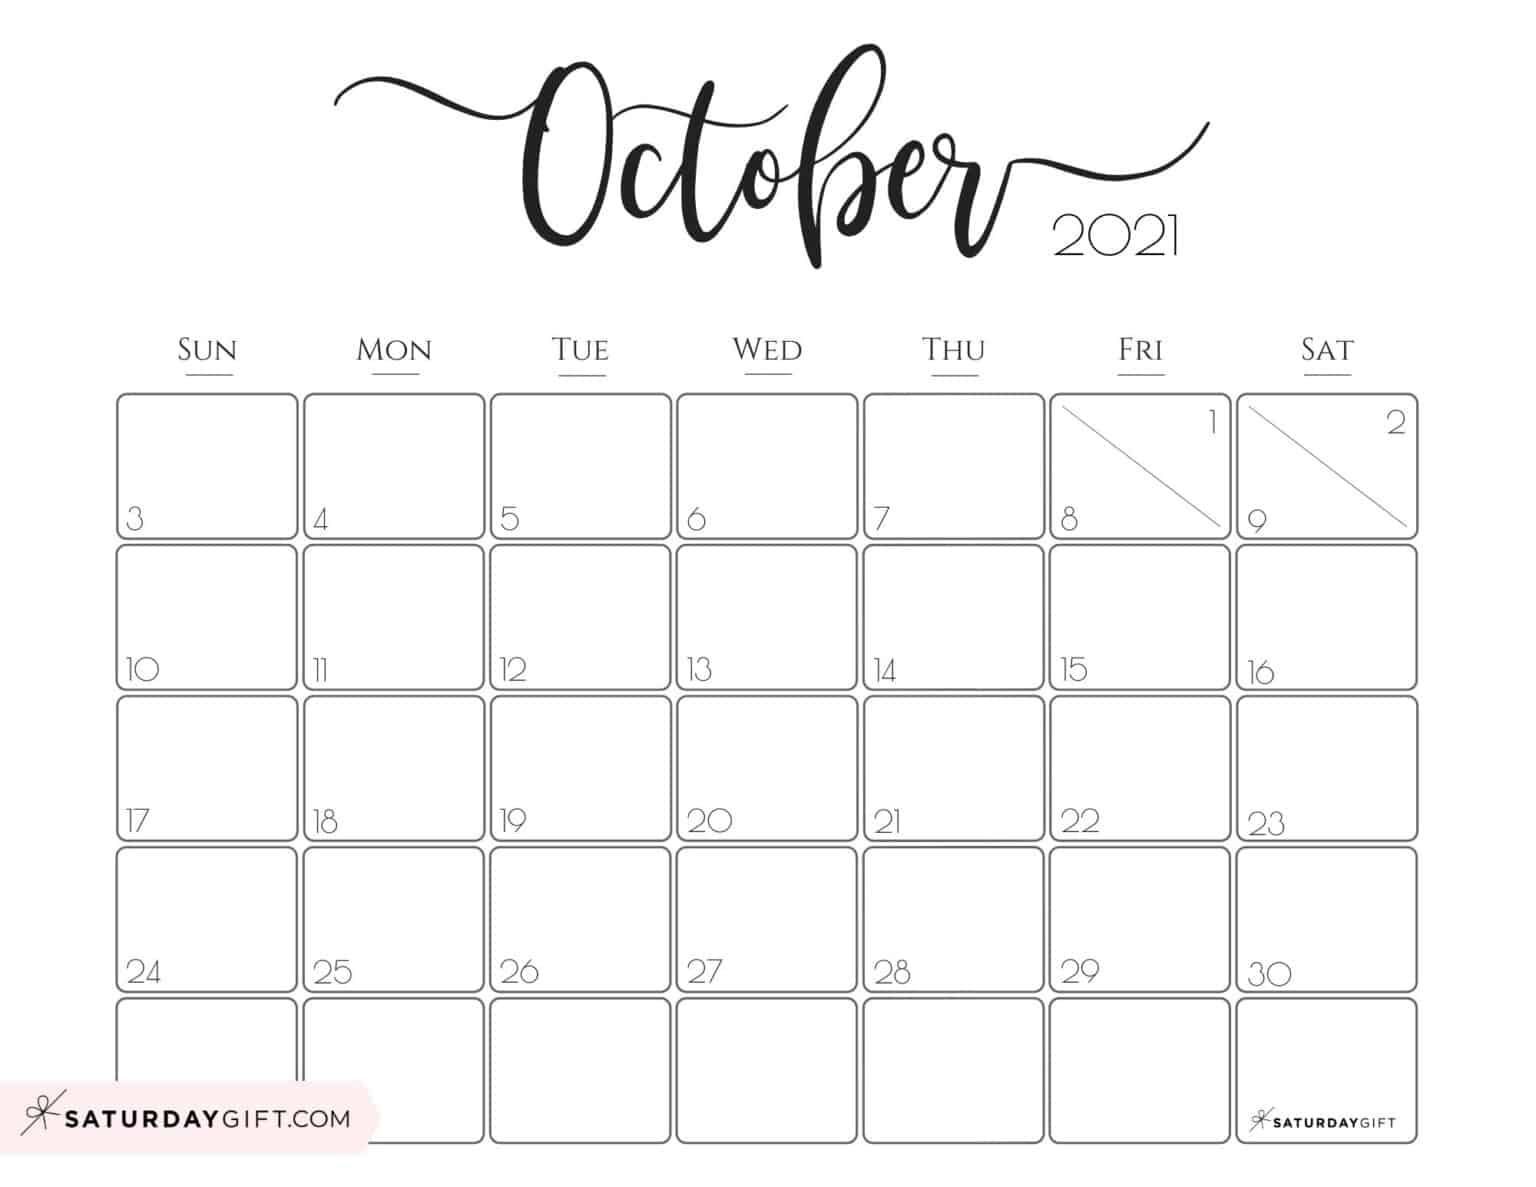 october-2021-calendar-wallpapers-wallpaper-cave